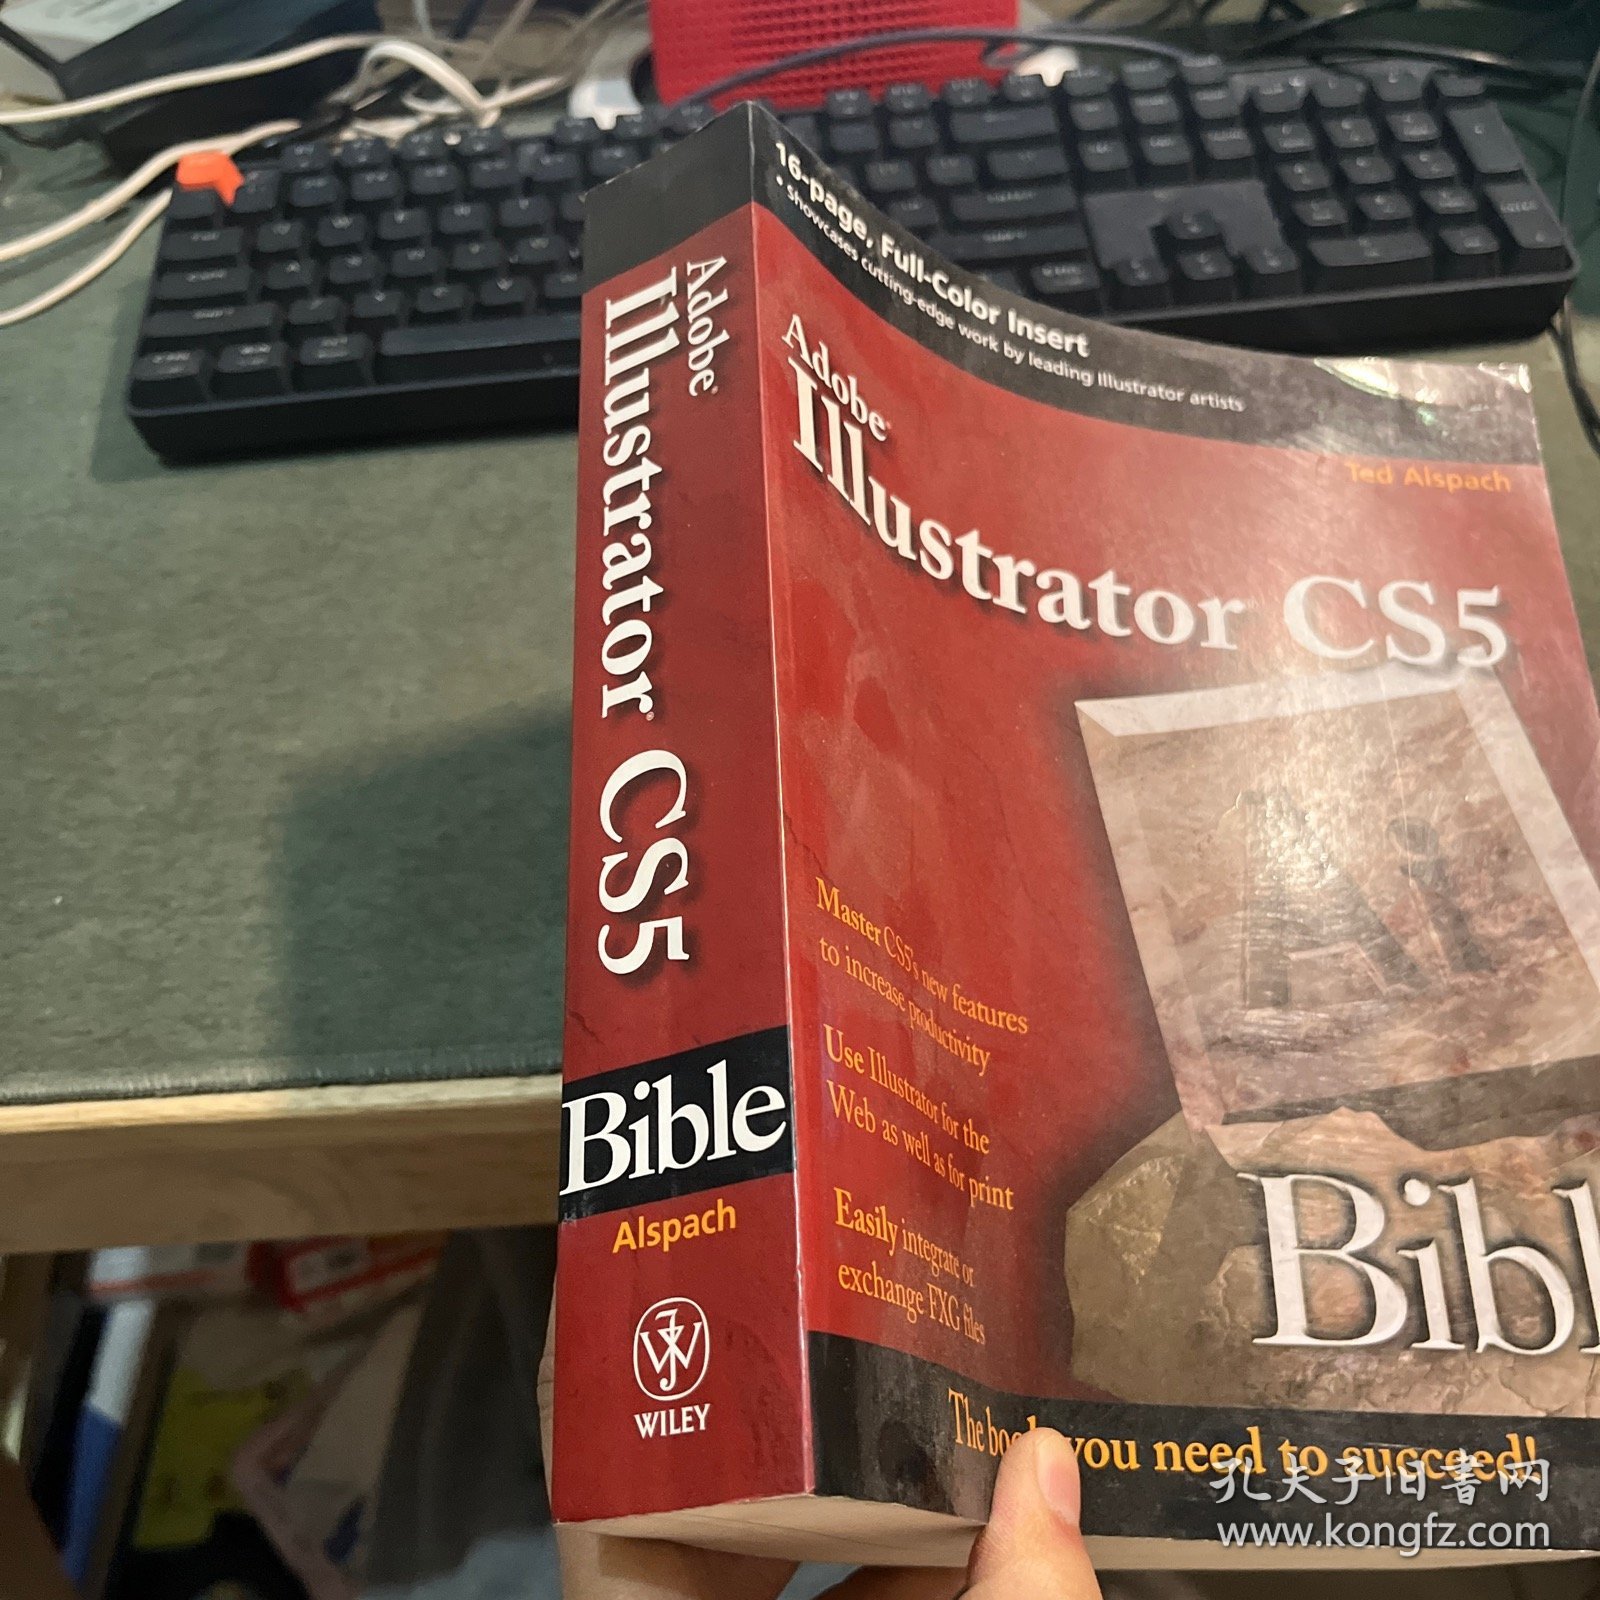 Adobe Illustrator CS5 Bible